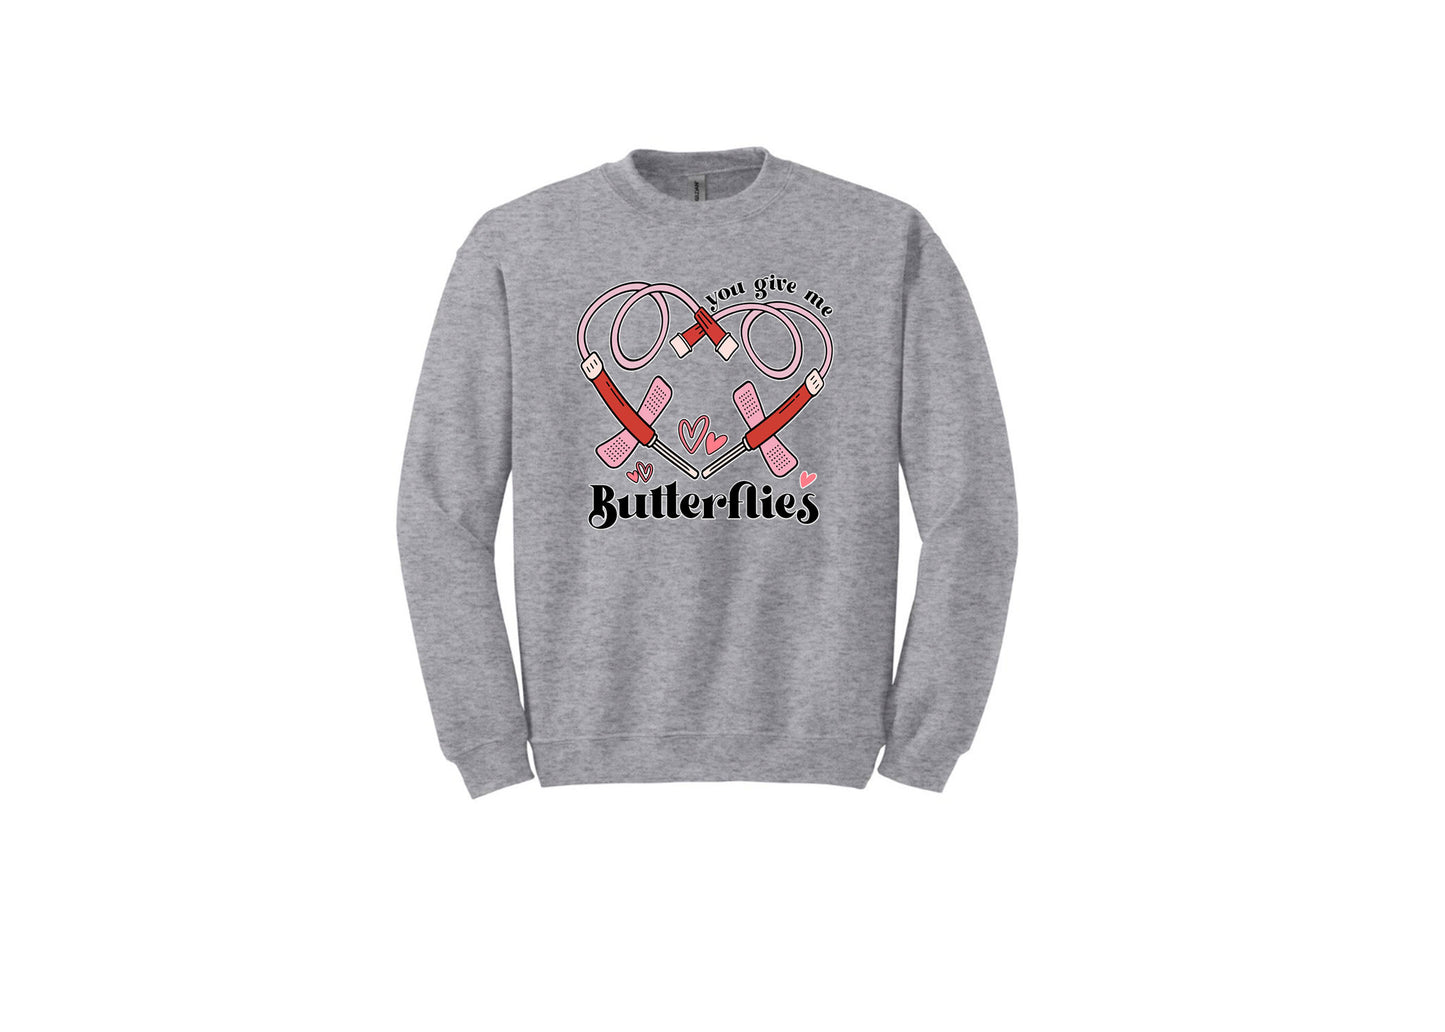 Butterflies Unisex Shirts or Crew